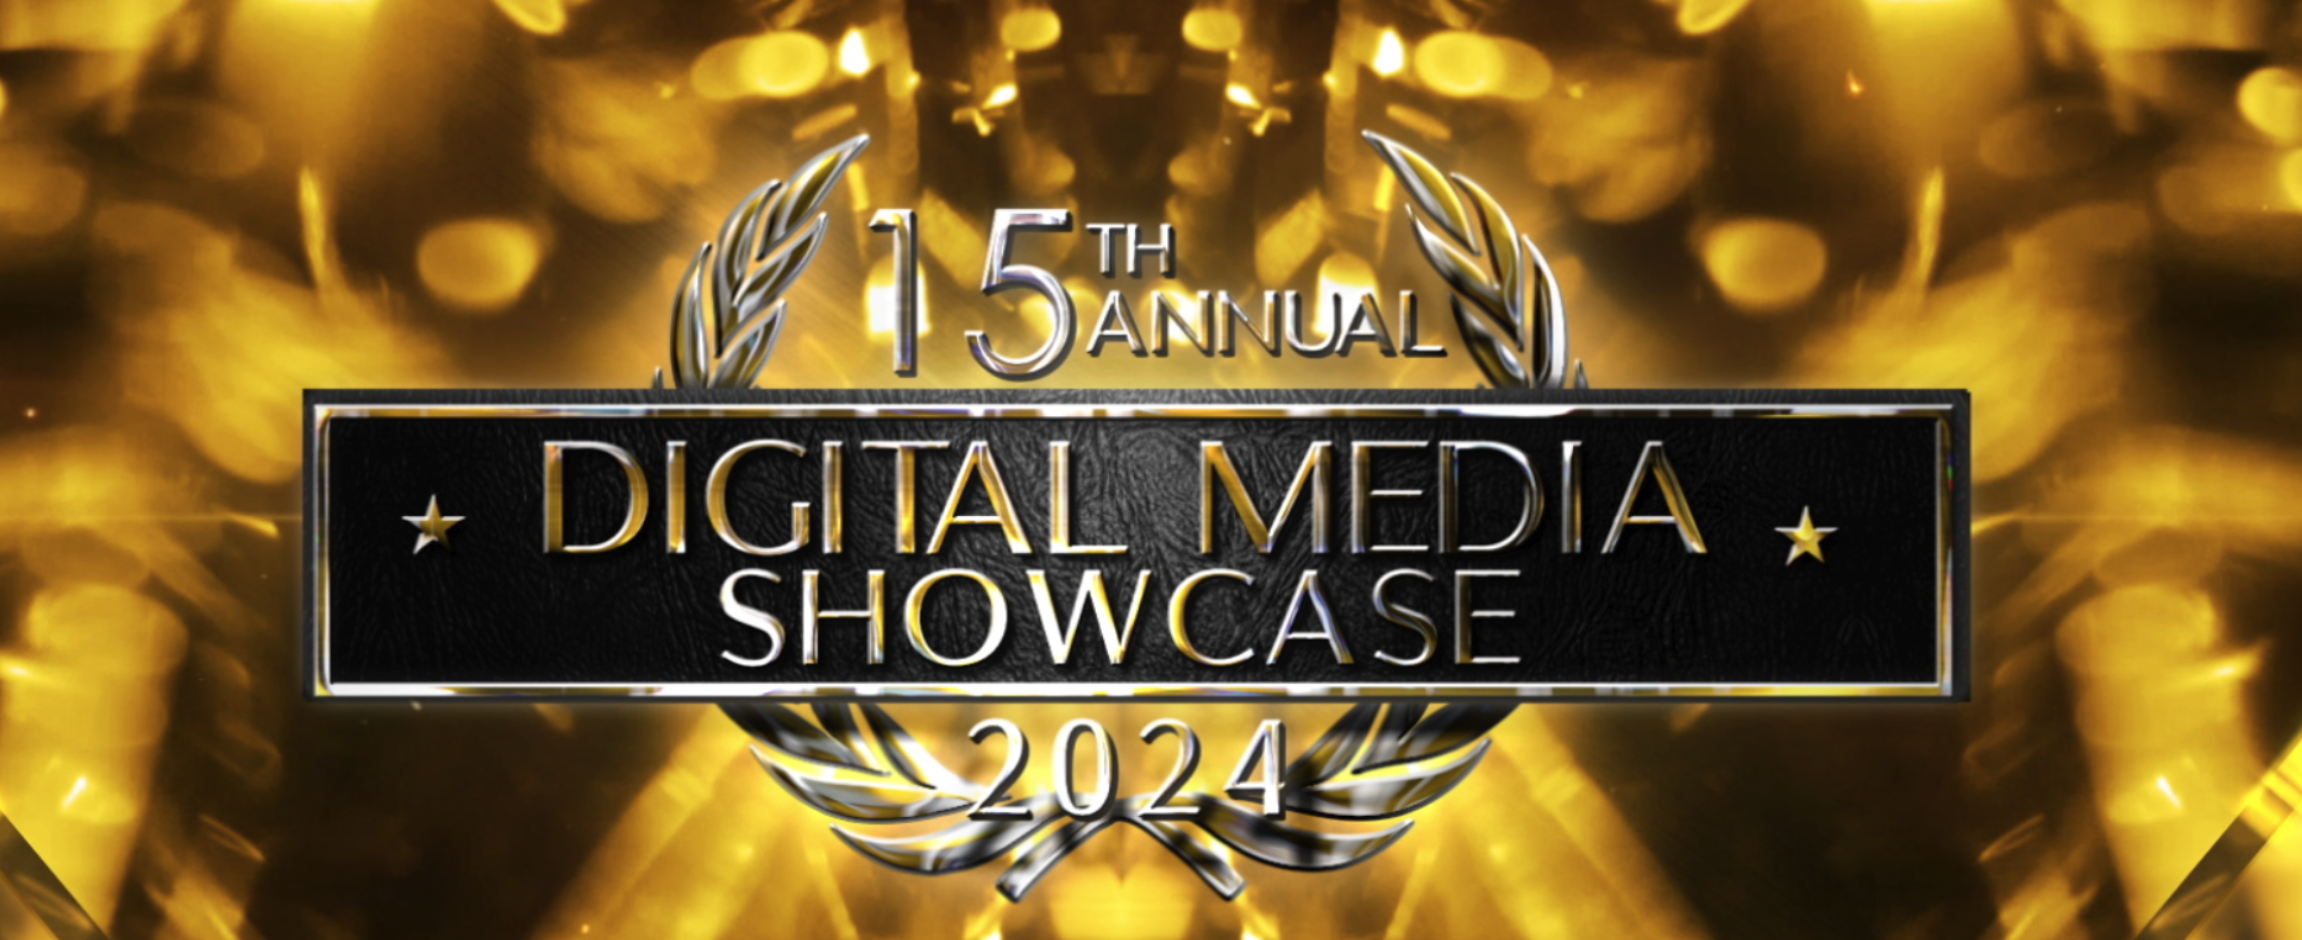 Digital Media Showcase title card